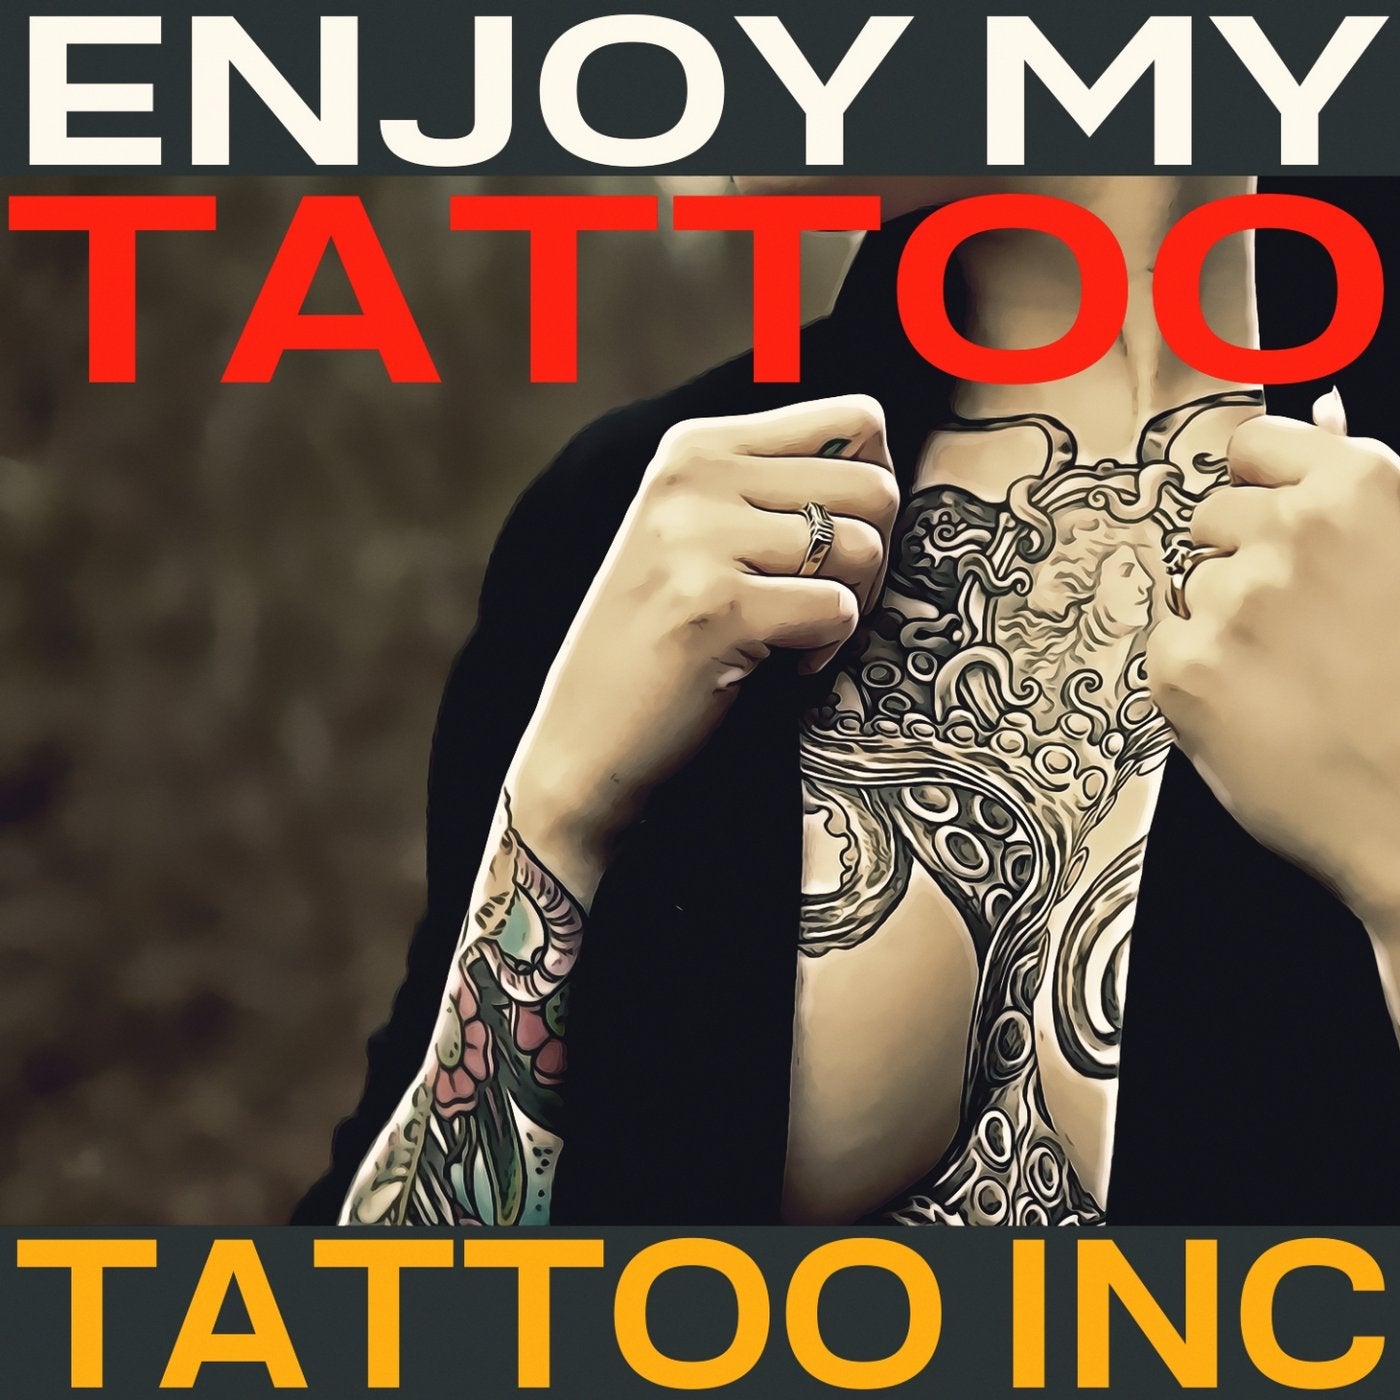 Enjoy my tattoo